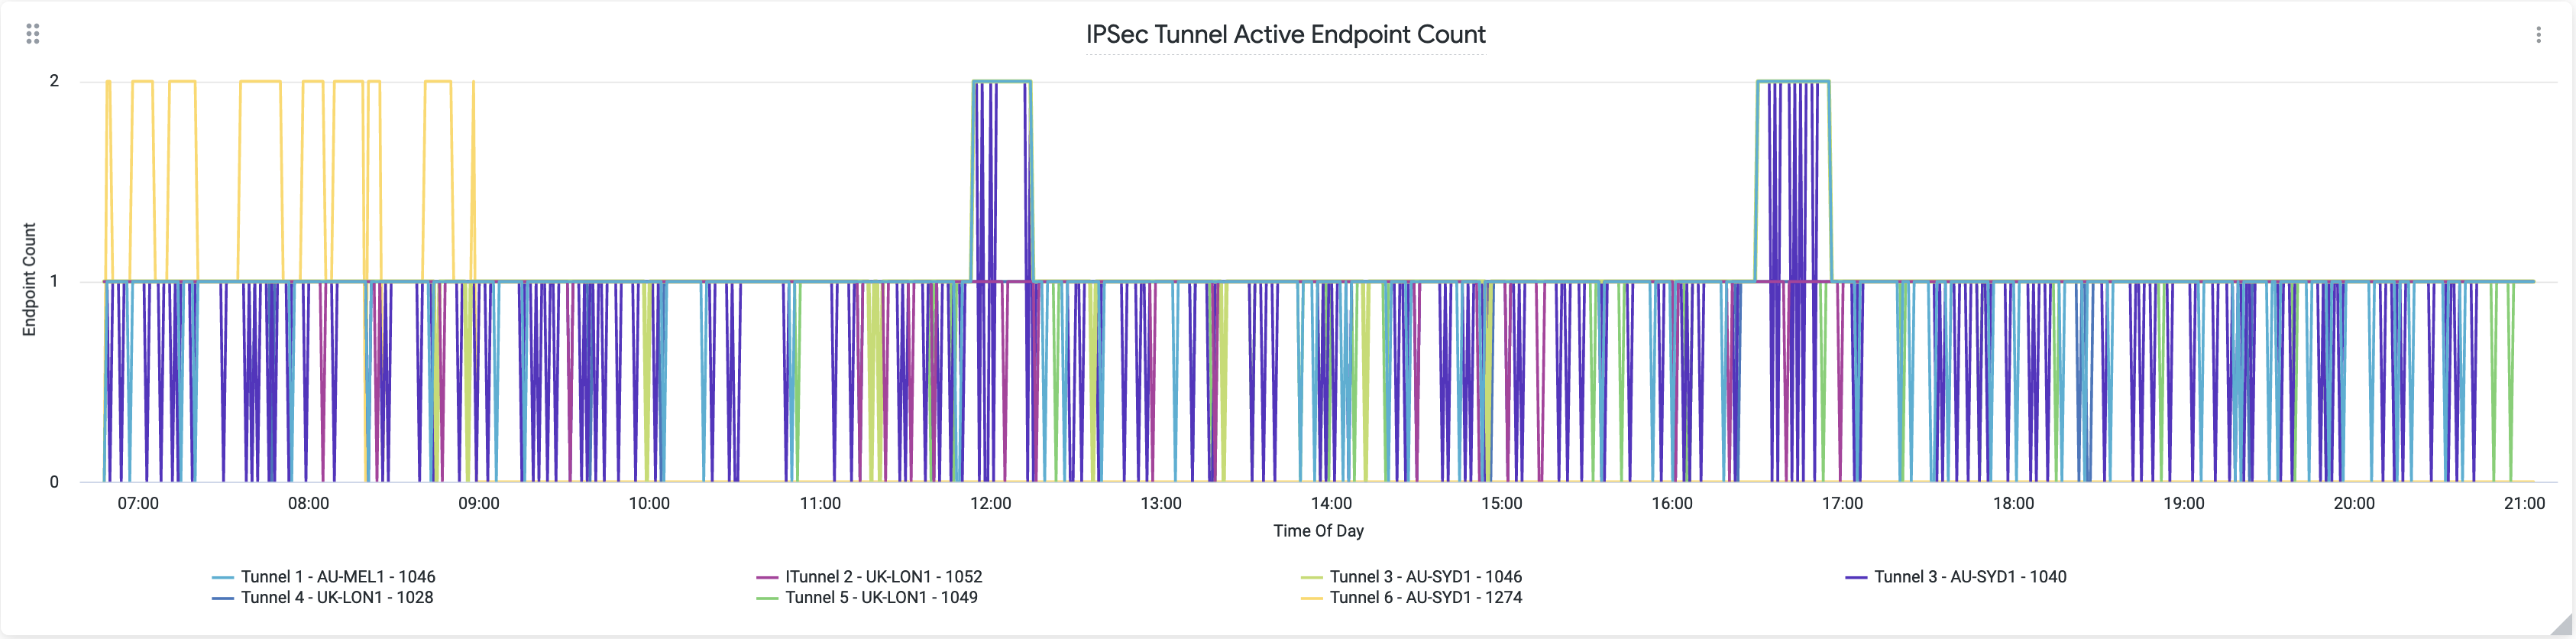 Netskope-DEM-IPSec-Tunnel-Active-Endpoint-Count.png